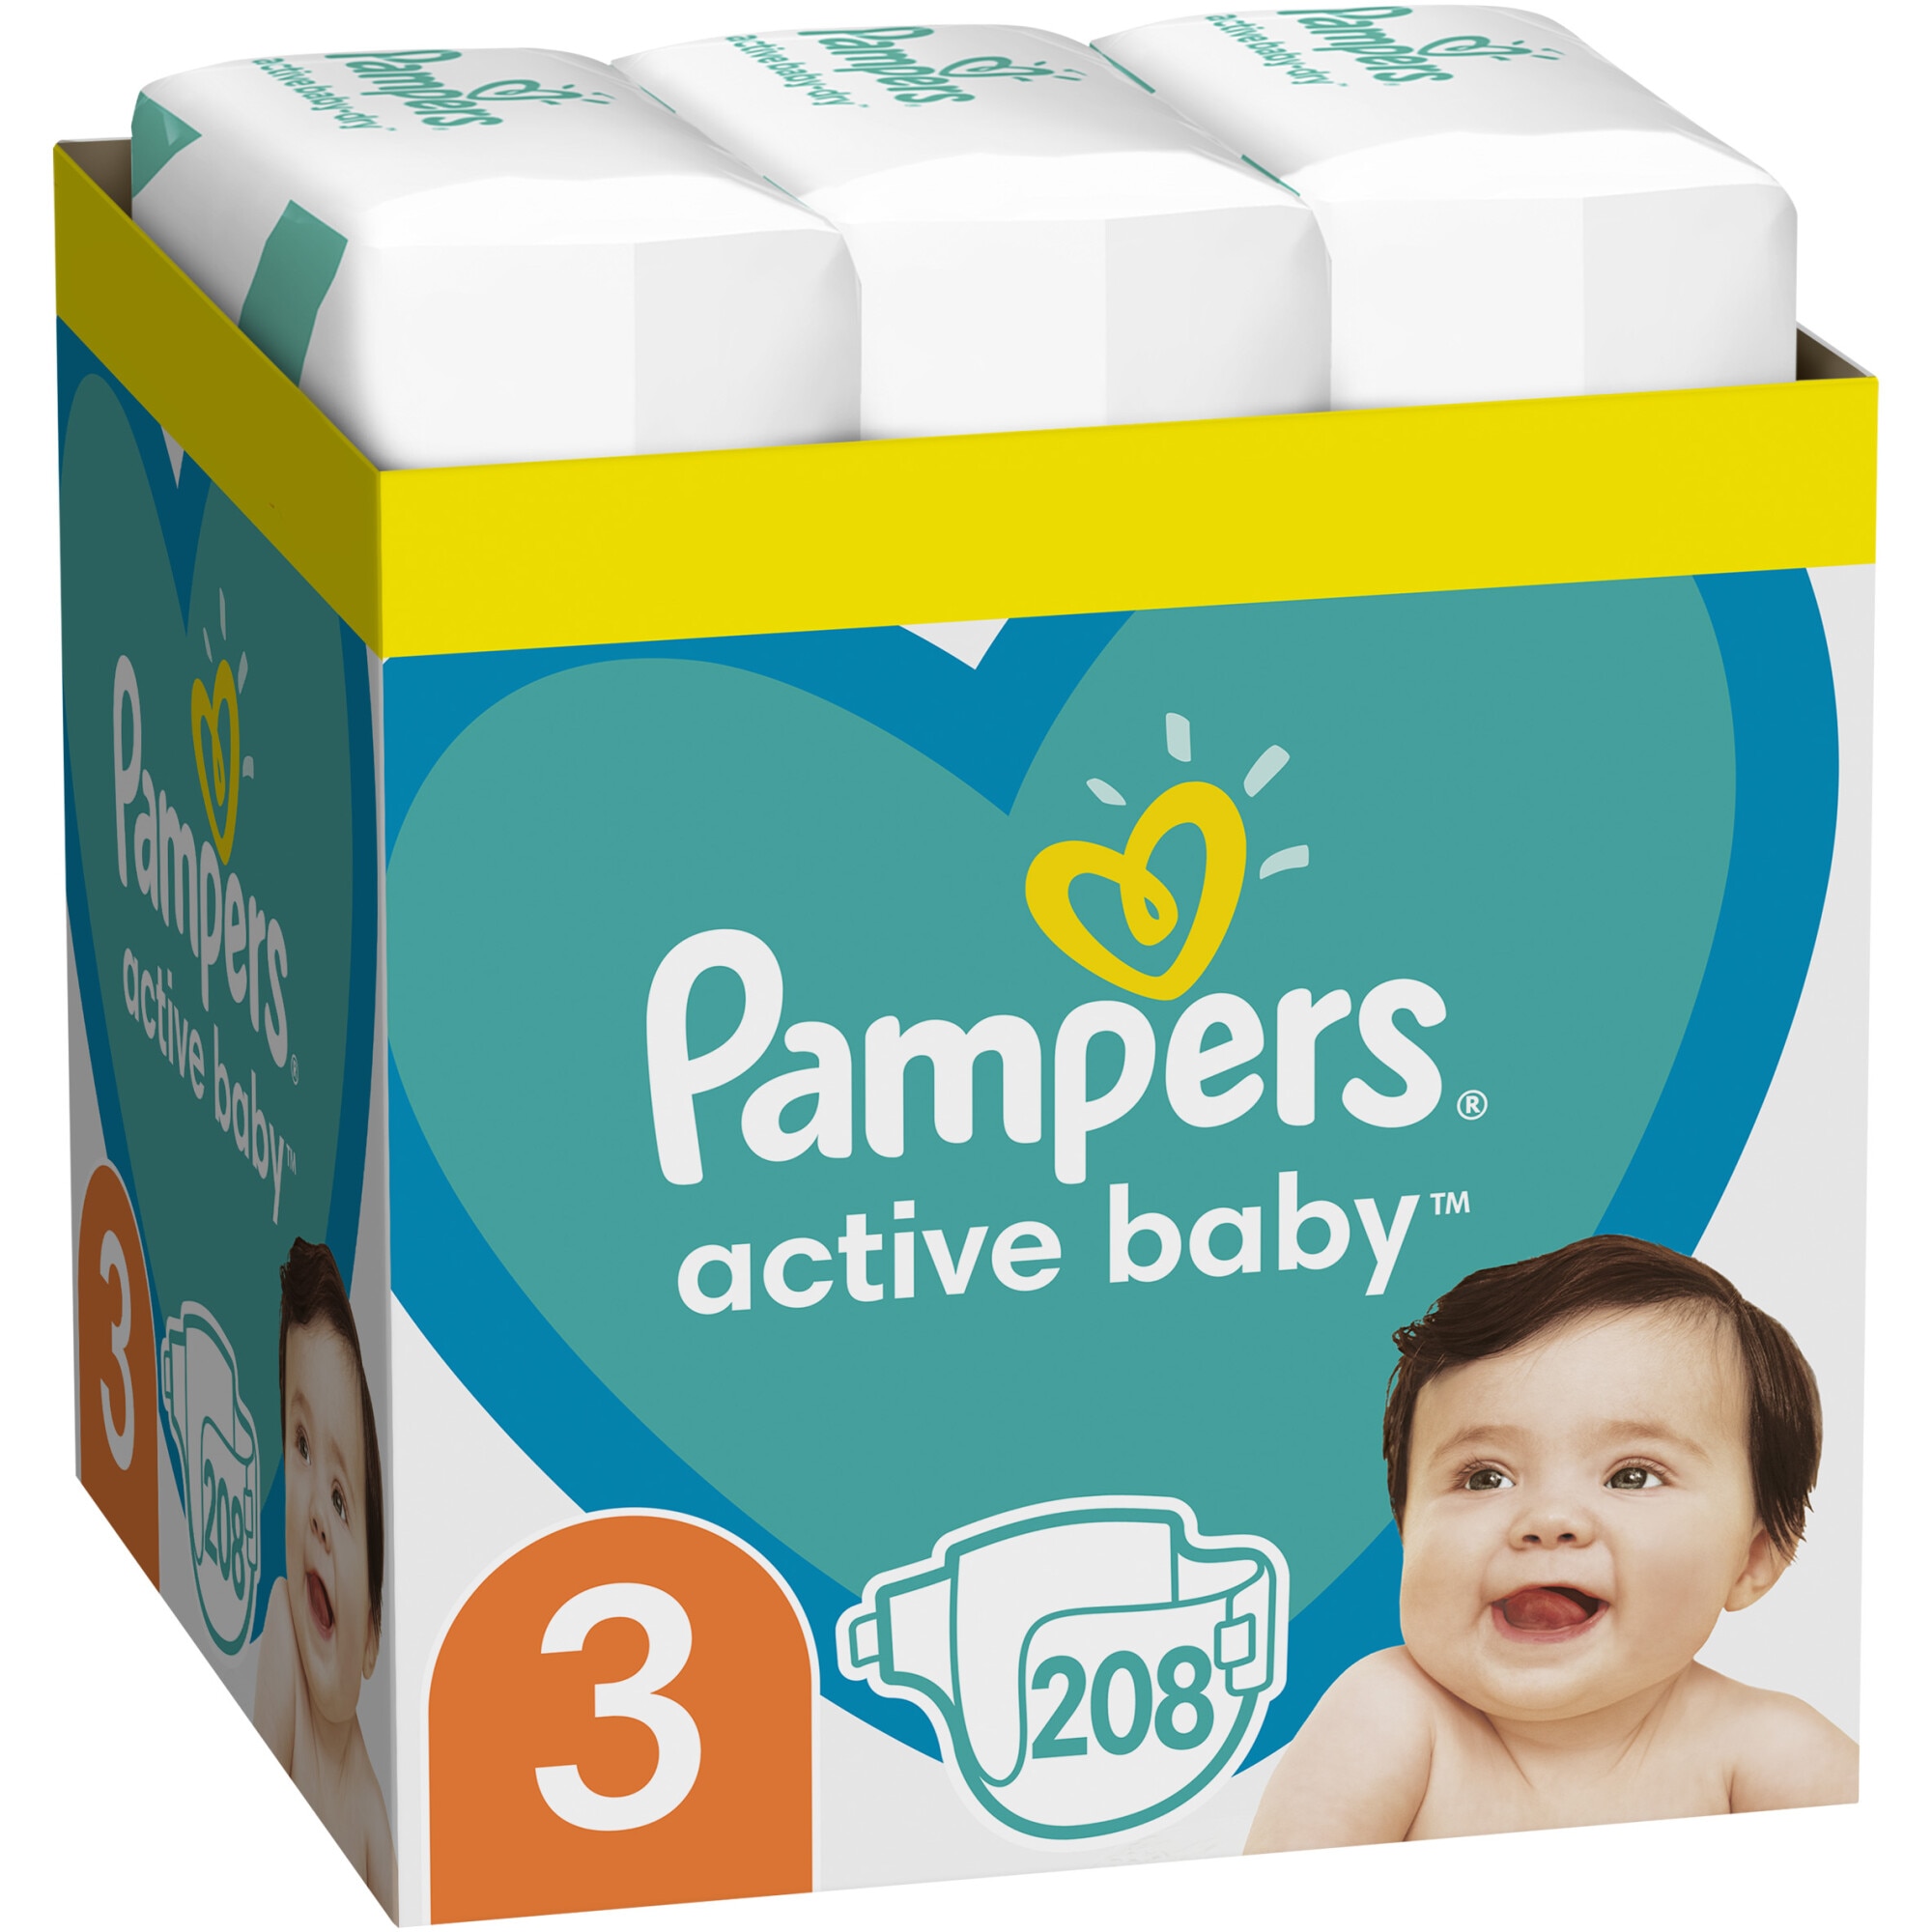 pampers active baby mega box plus 3 midi xxl